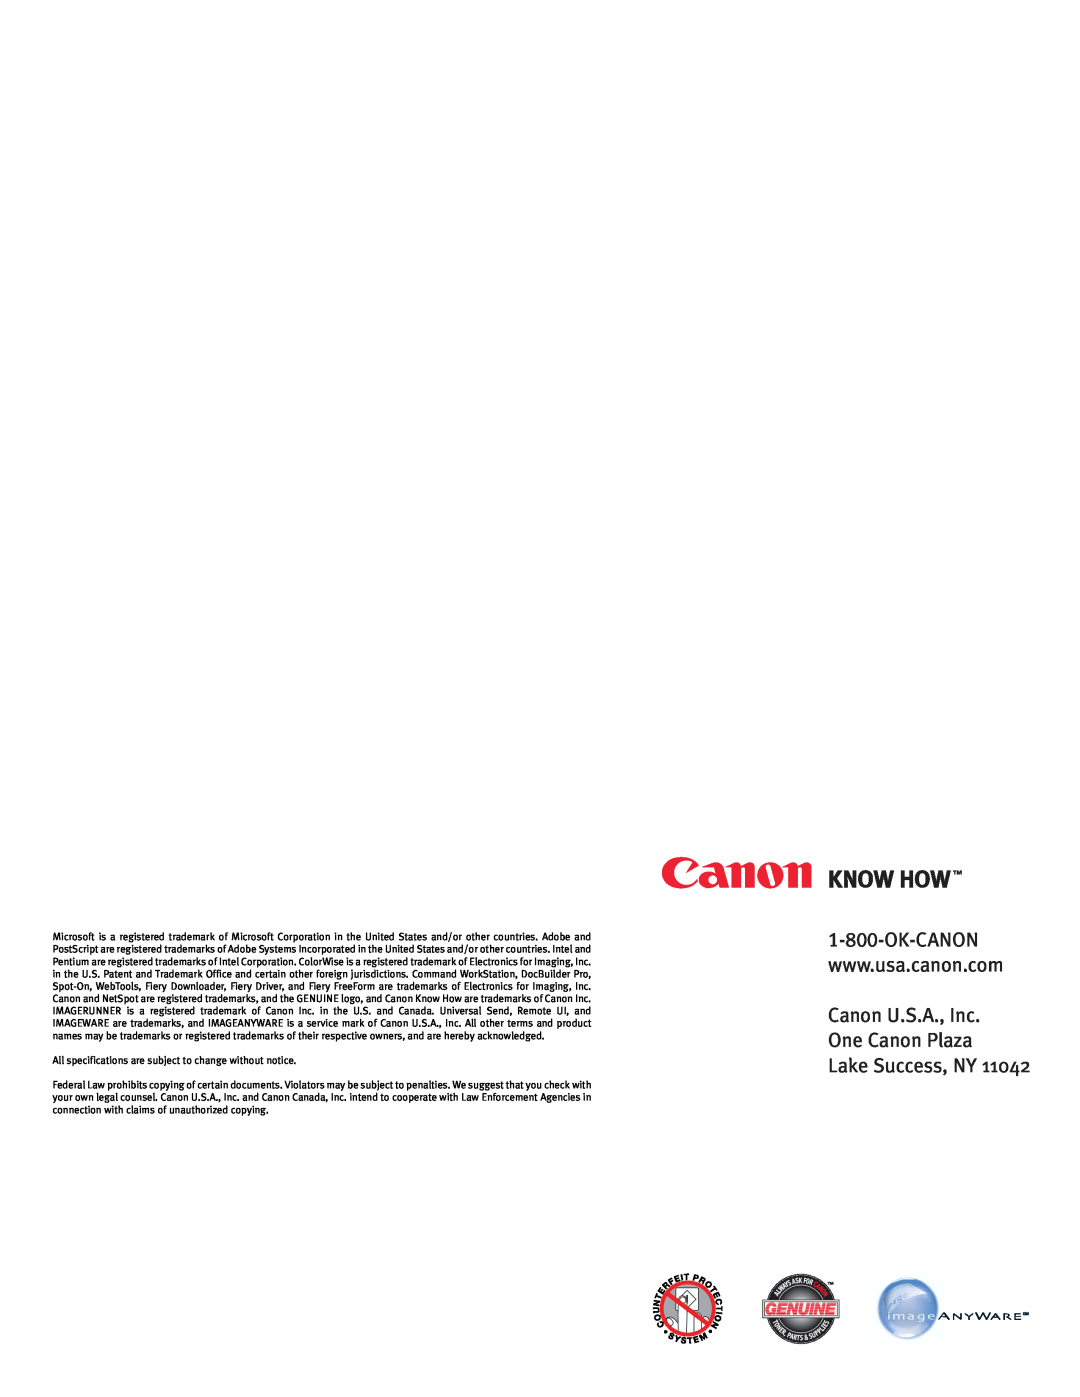 Canon C3200 specifications Canon U.S.A., Inc One Canon Plaza Lake Success, NY 